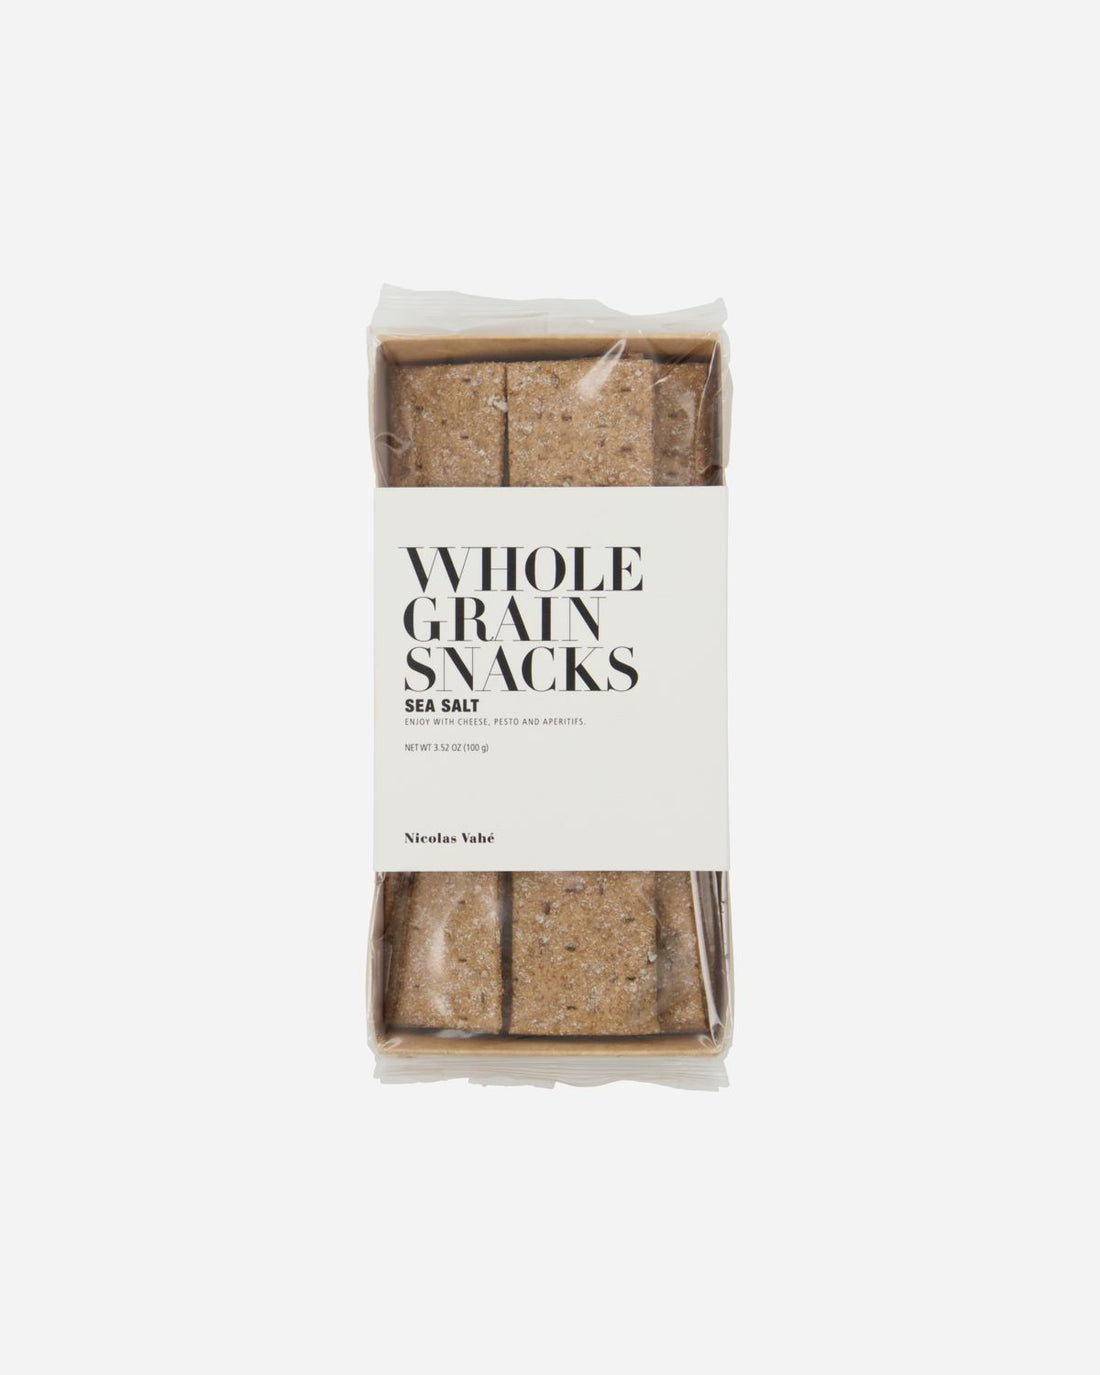 Nicolas vahé - Whole grain snacks, sea salt